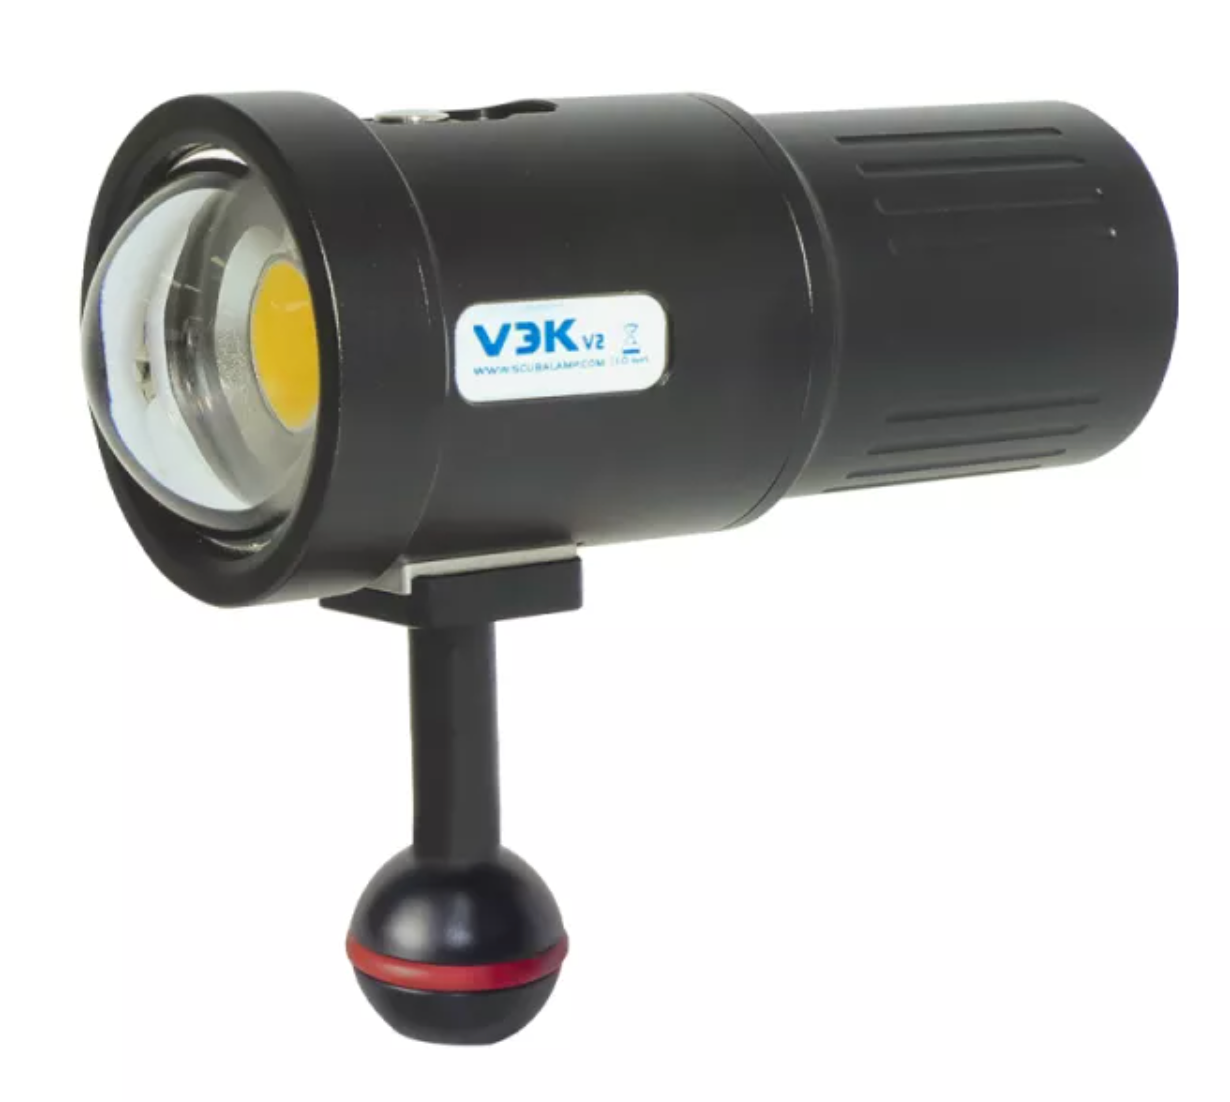 V3K v2 - 5,000 Lumens Video Light